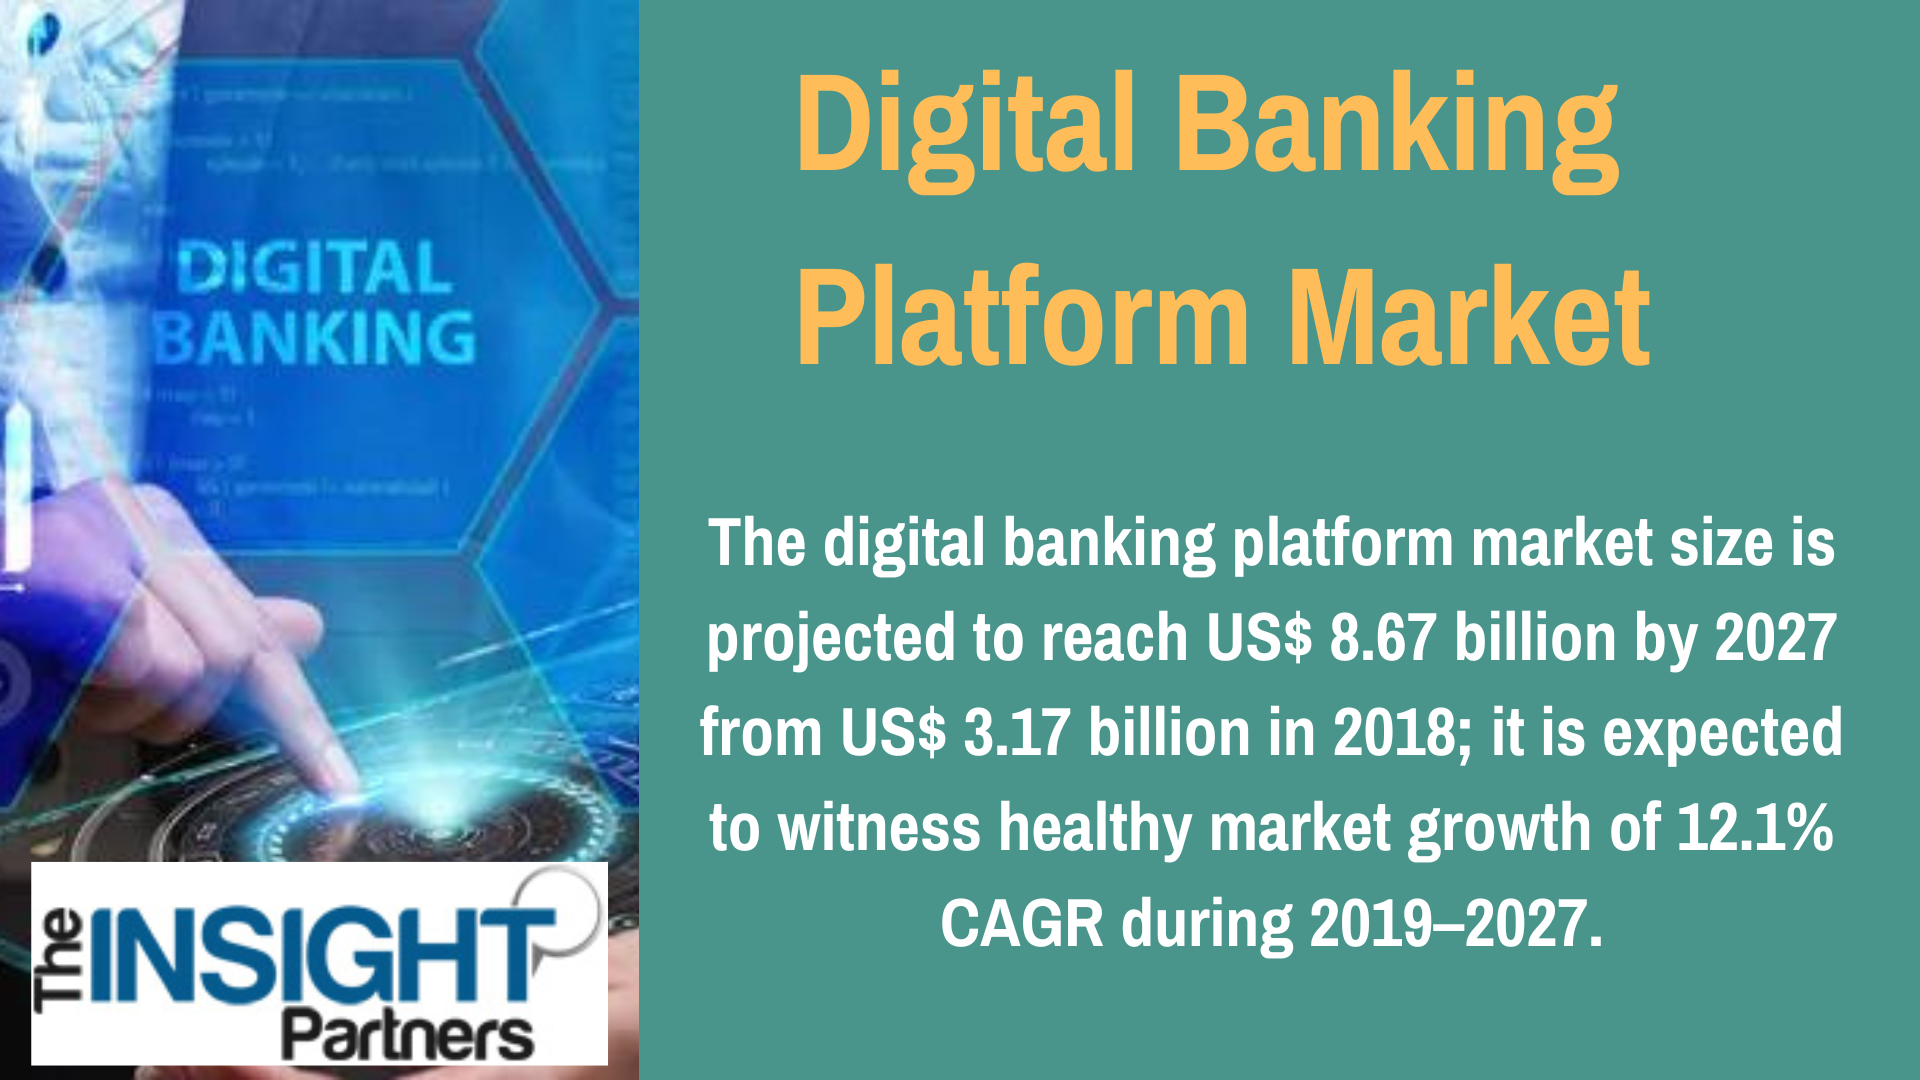 Digital Banking Platform Market Forecast Insights Shared in Detailed Report